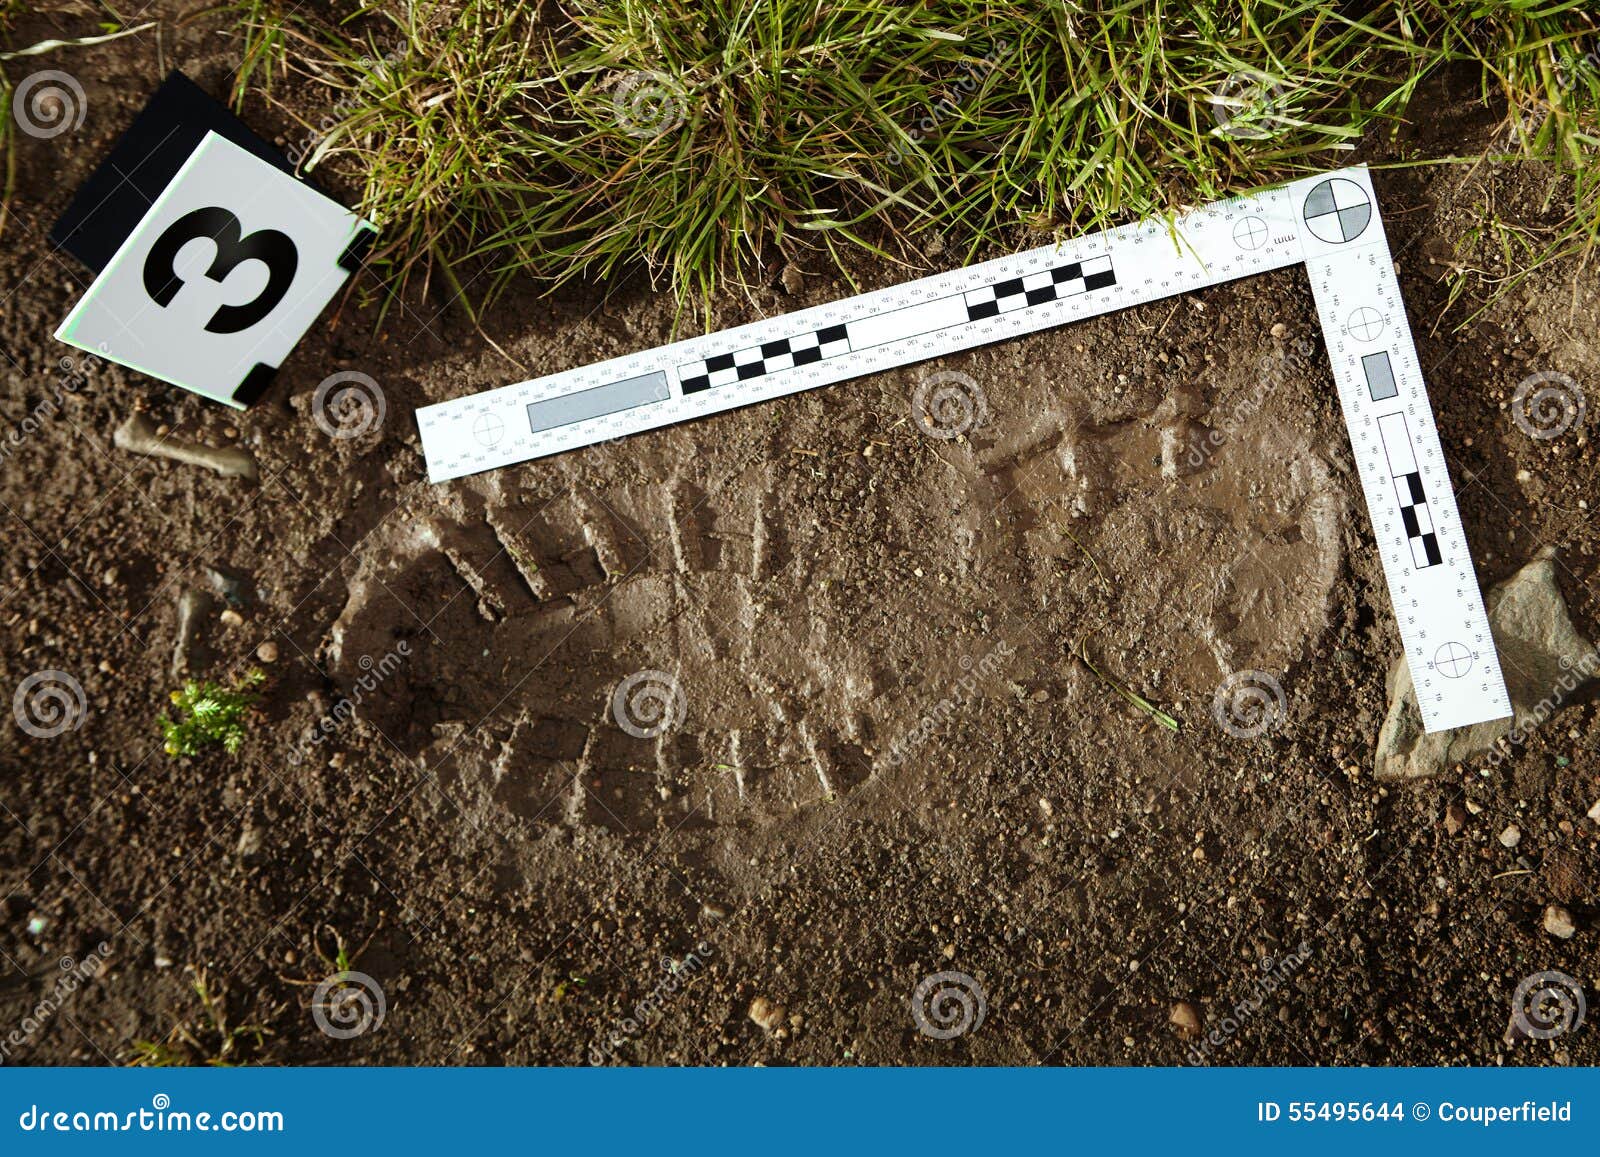 evidence of footprint on crime scene